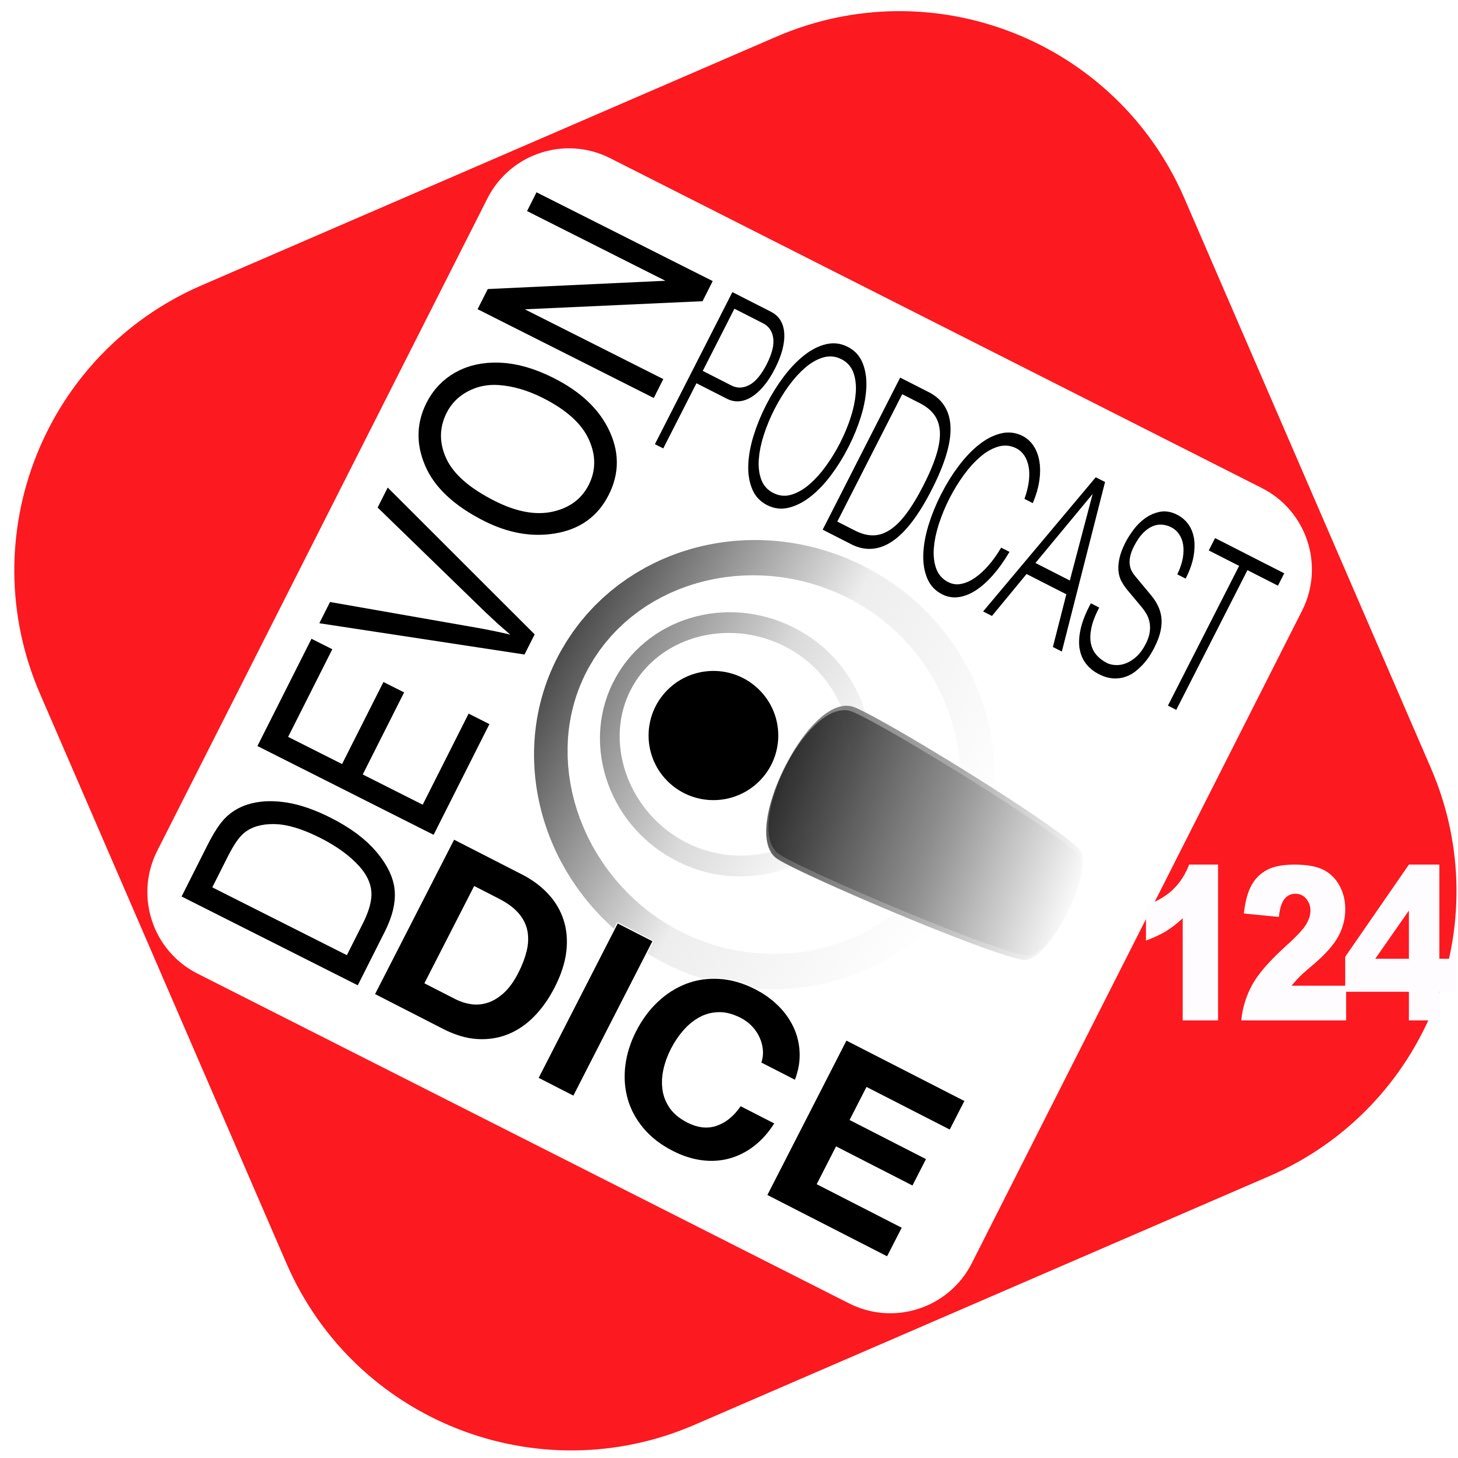 124 Devon Dice Podcast News Show April